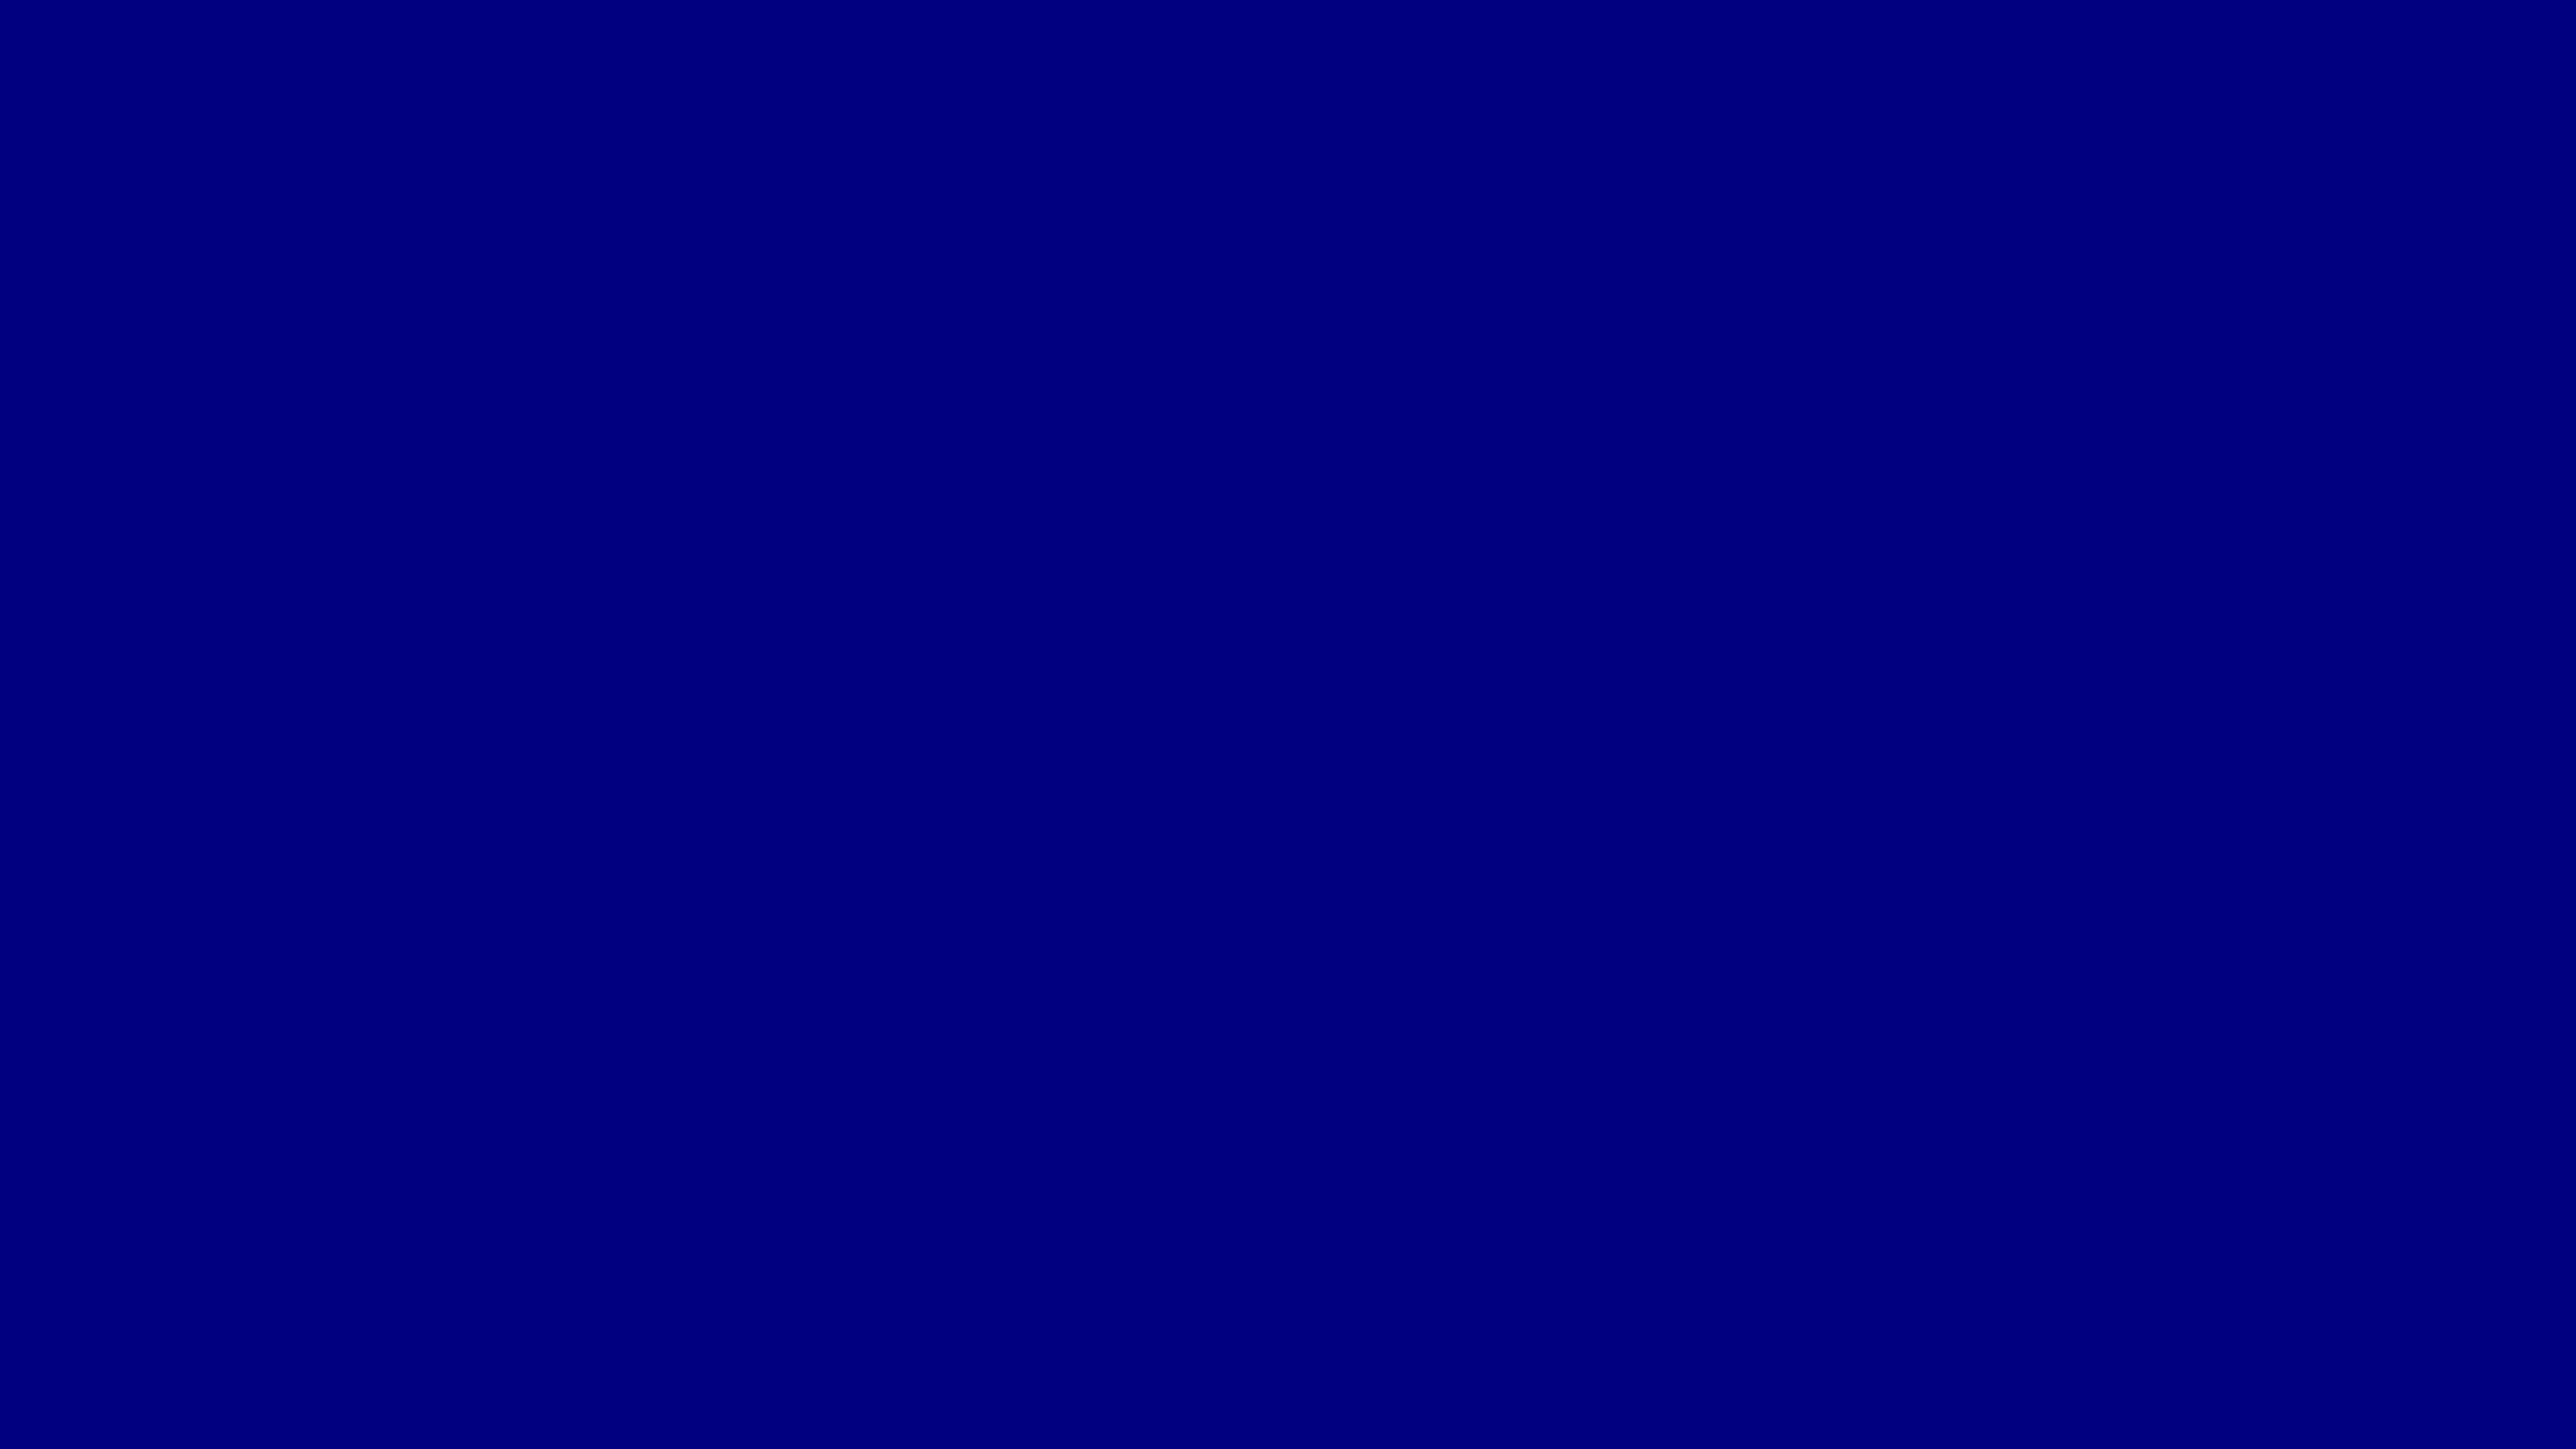 Hex Color Code 000080 Navy Blue Color Information Hsl Rgb Pantone